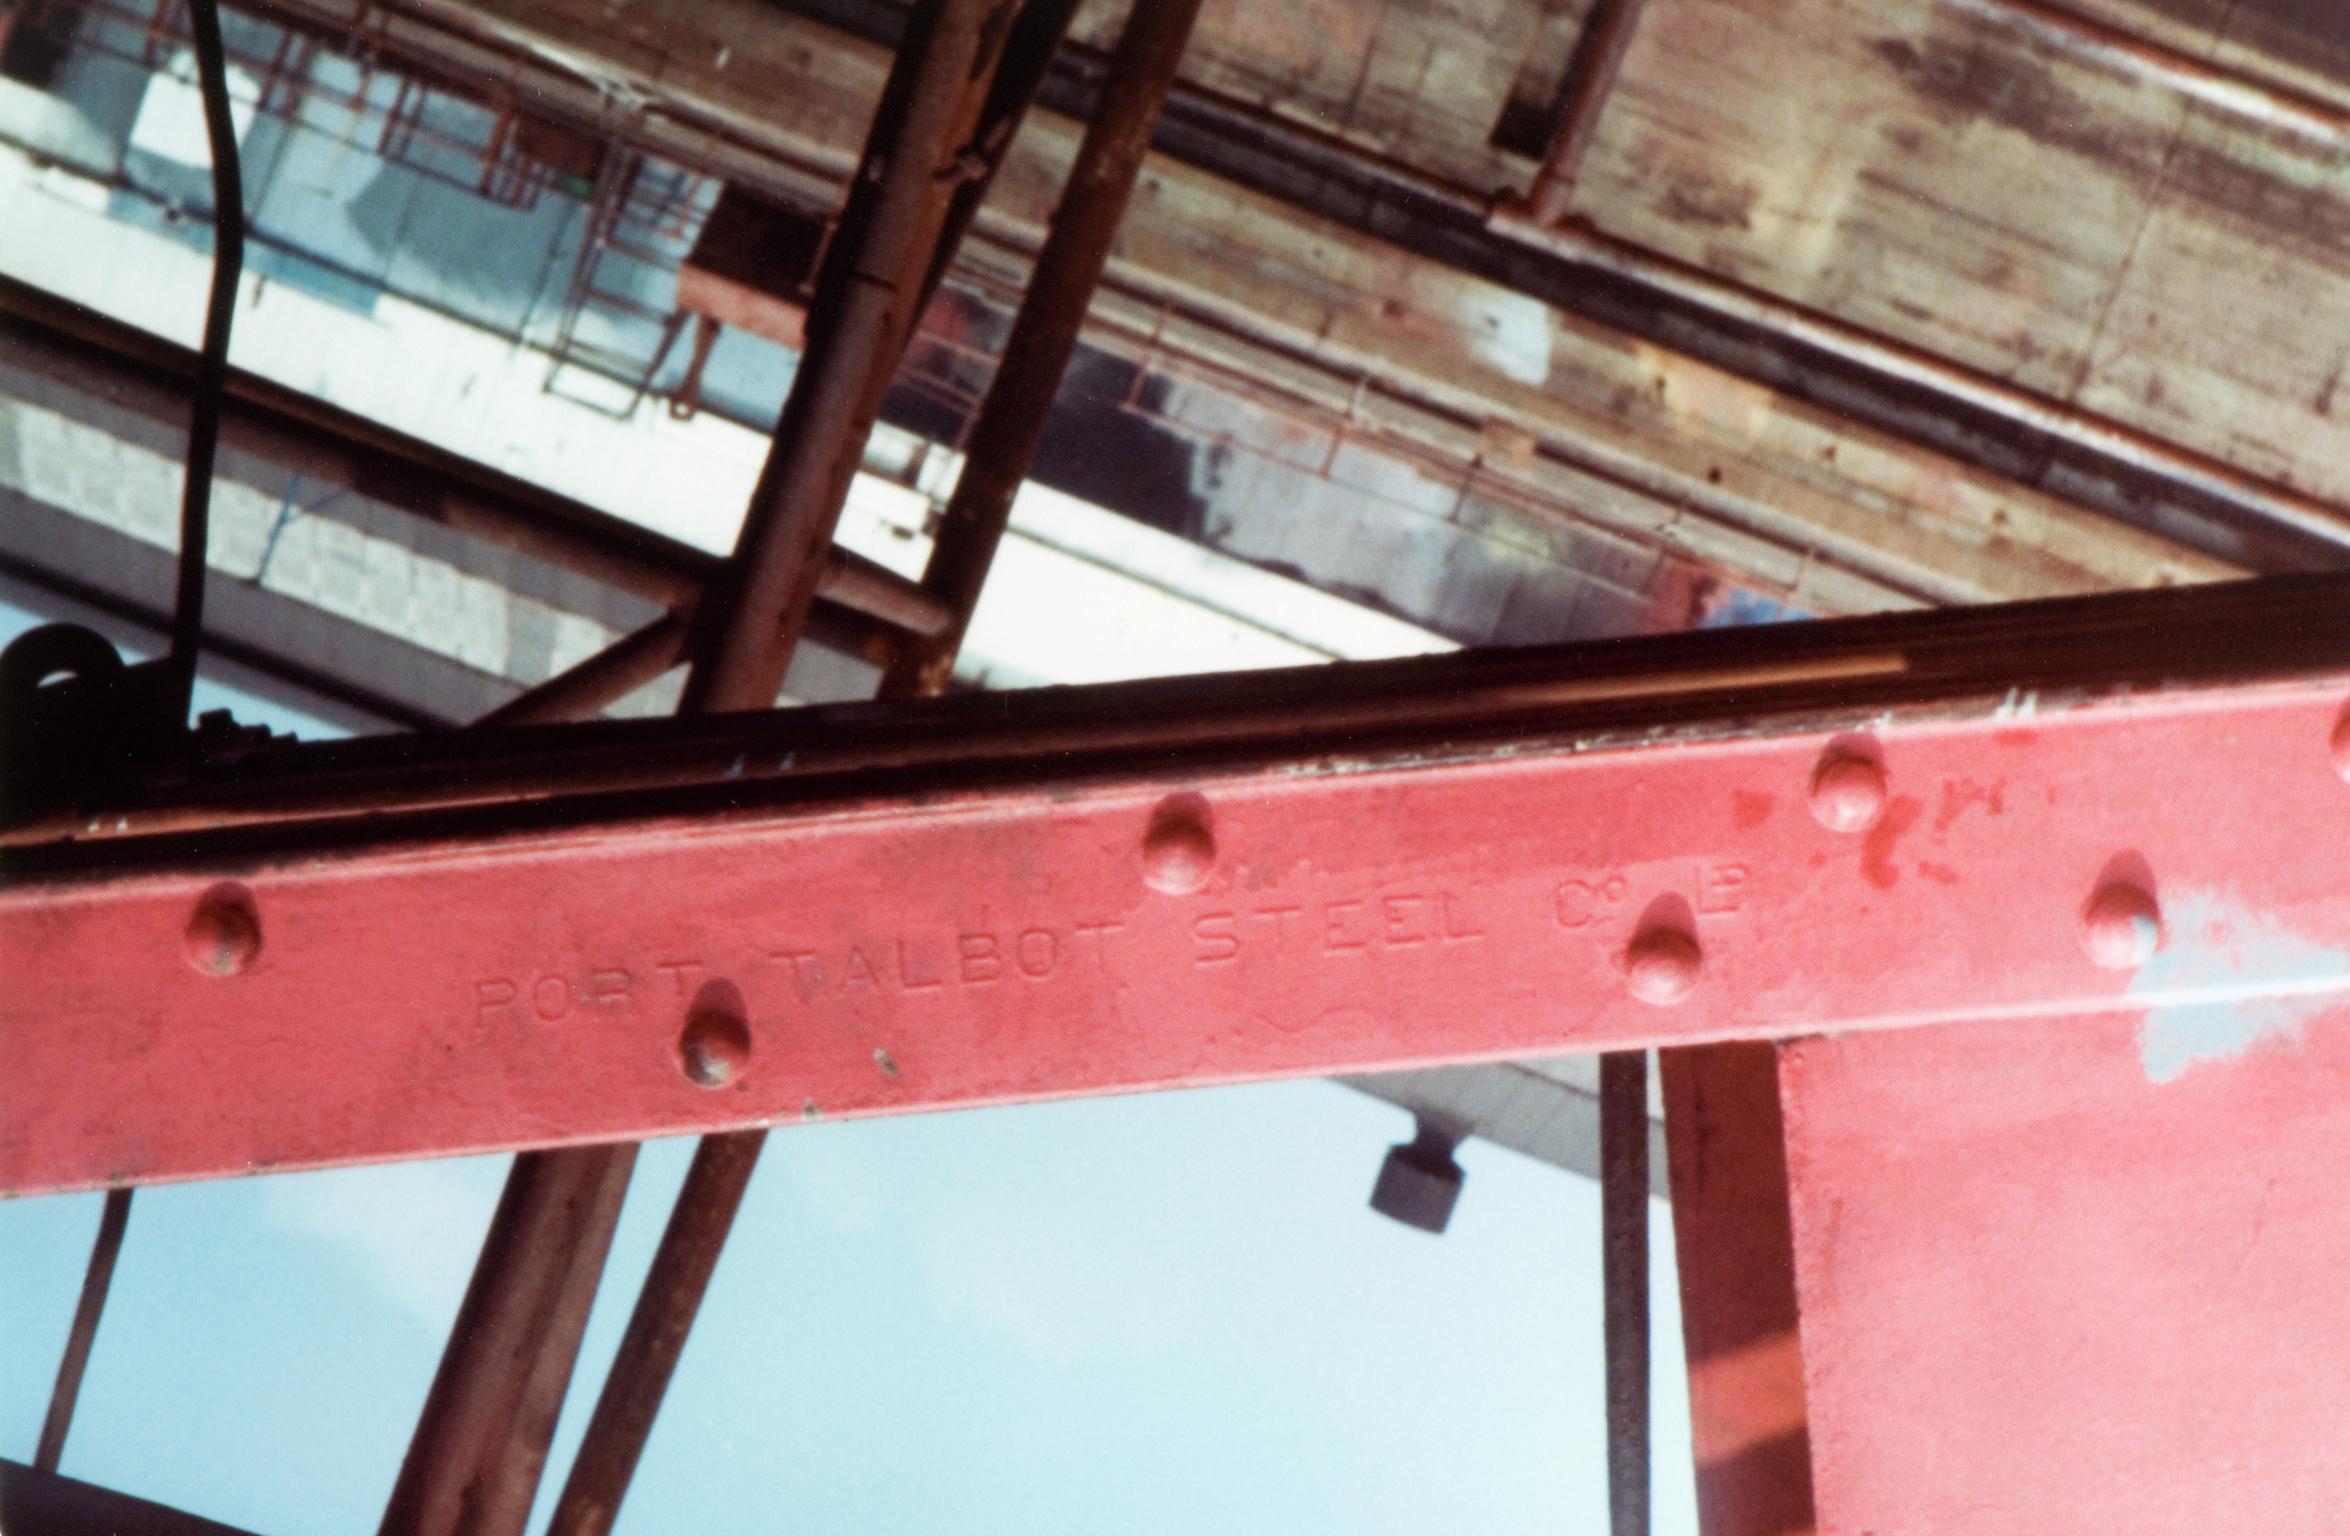 Port Talbot Steel Co. Ltd. steelwork, photograph